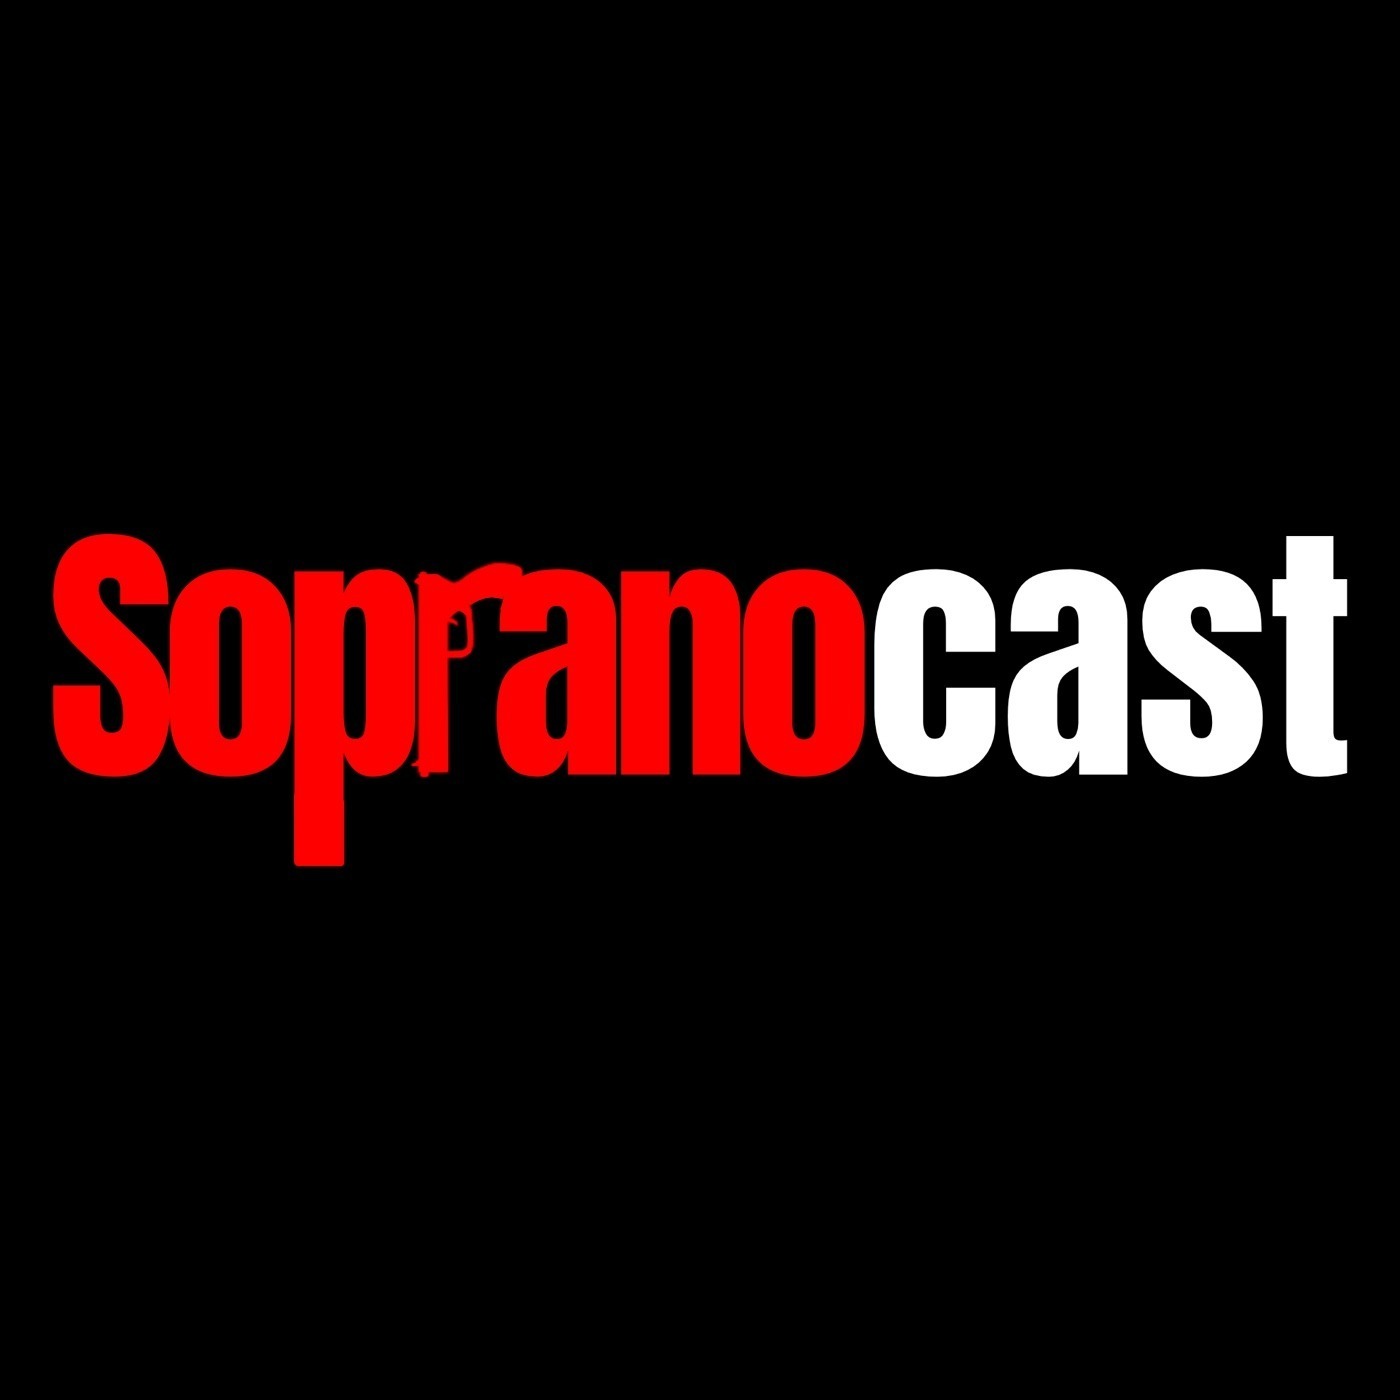 The SopranoCast